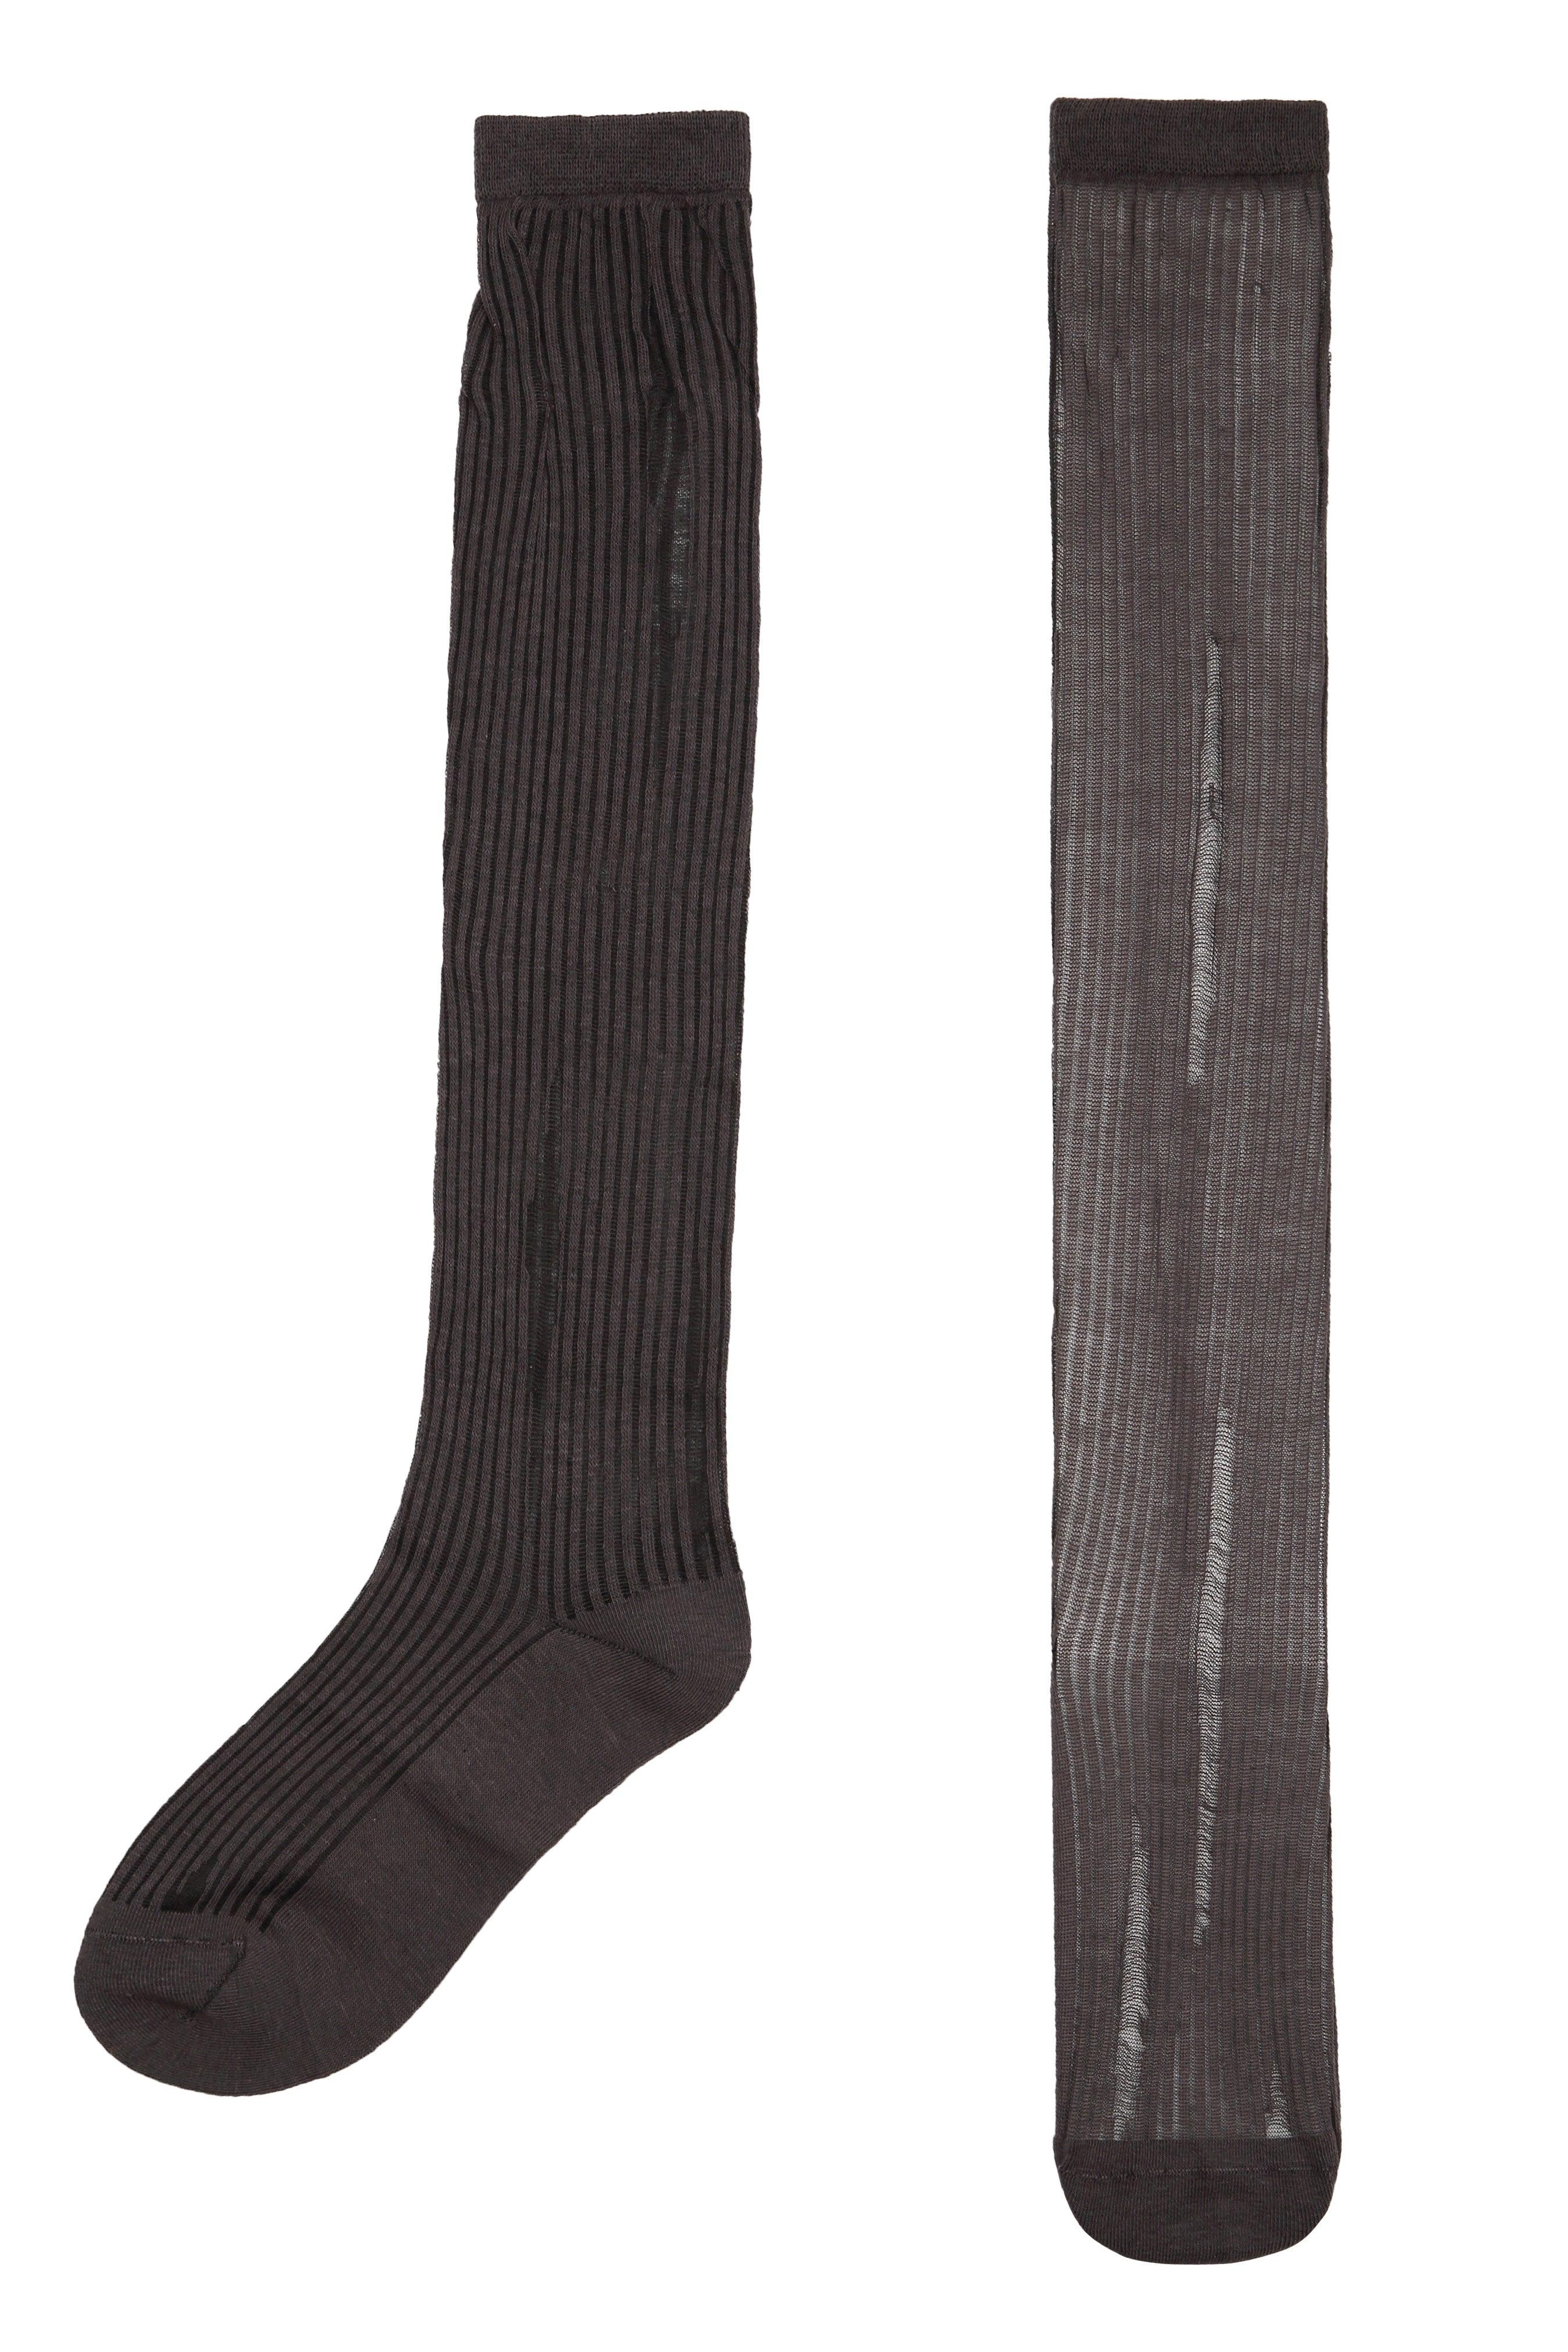 Ripped Stretch Long Socks - Uniqvibe